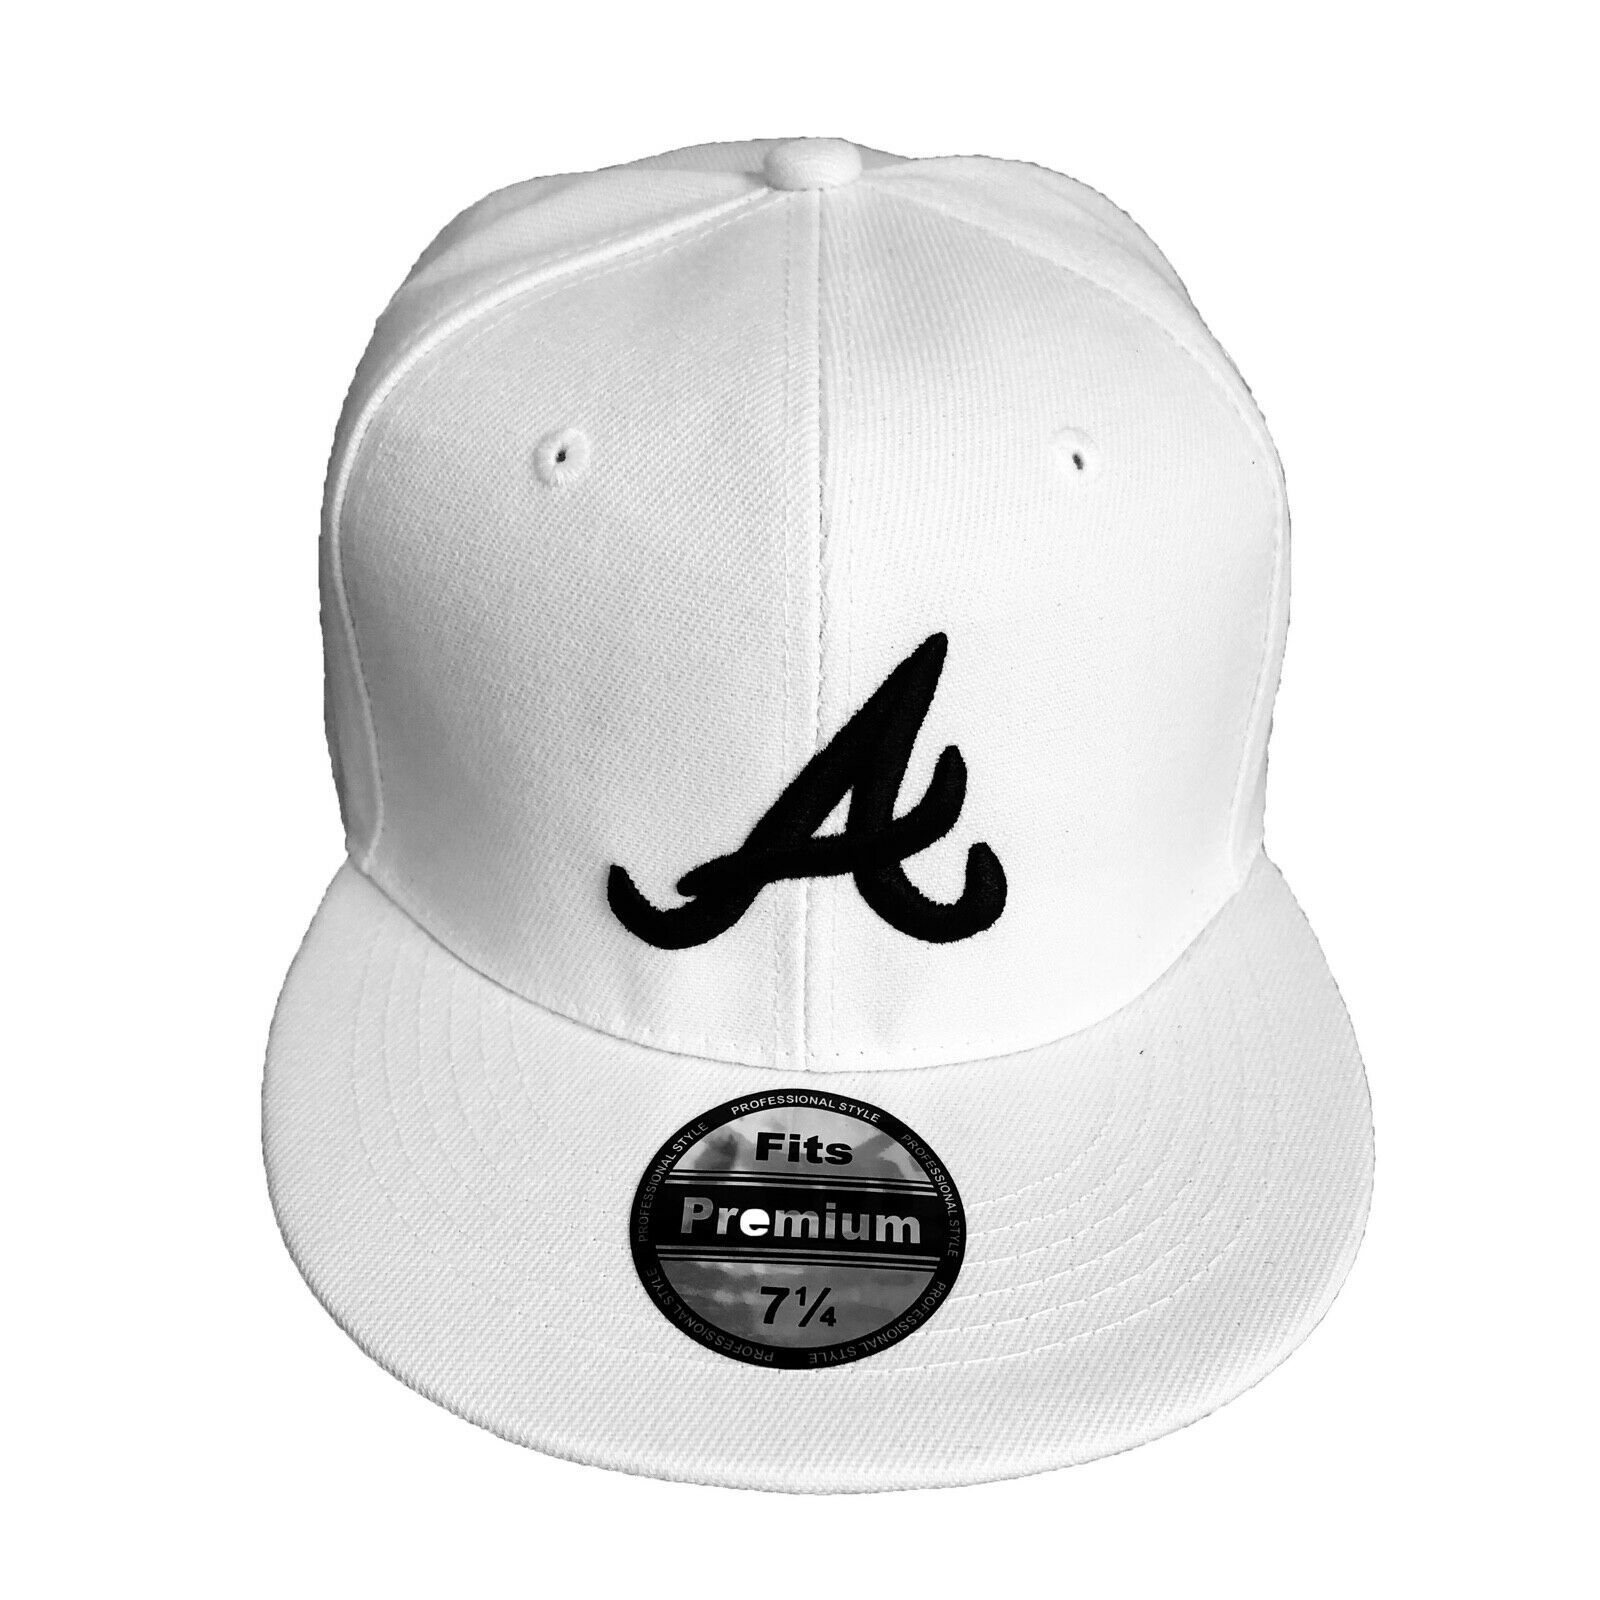 NEW Mens Atlanta Braves Baseball Cap Fitted Hat Multi Size White with black logo